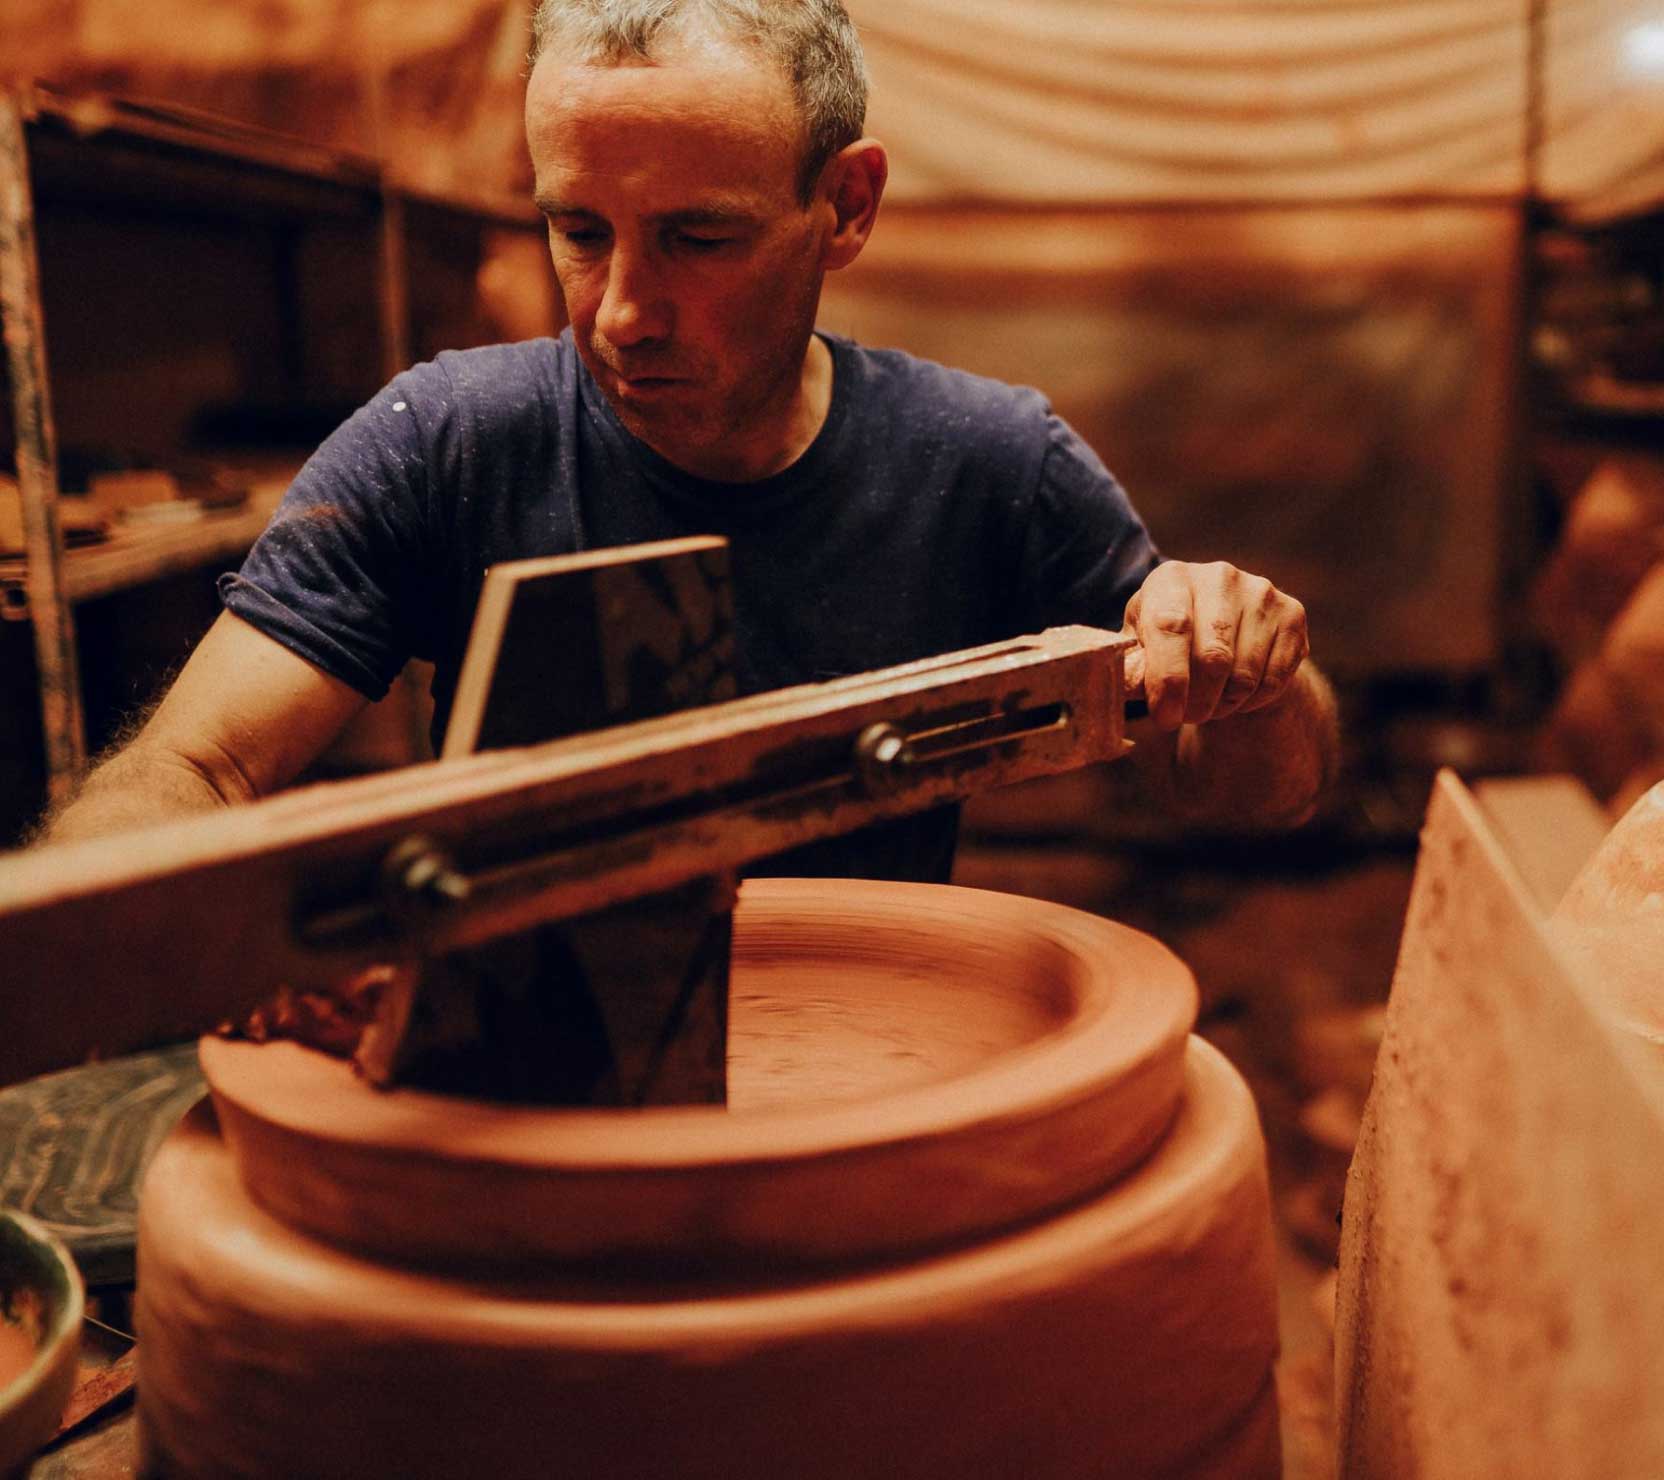 Our skilled artisan Pēteris, jiggering a large bowl